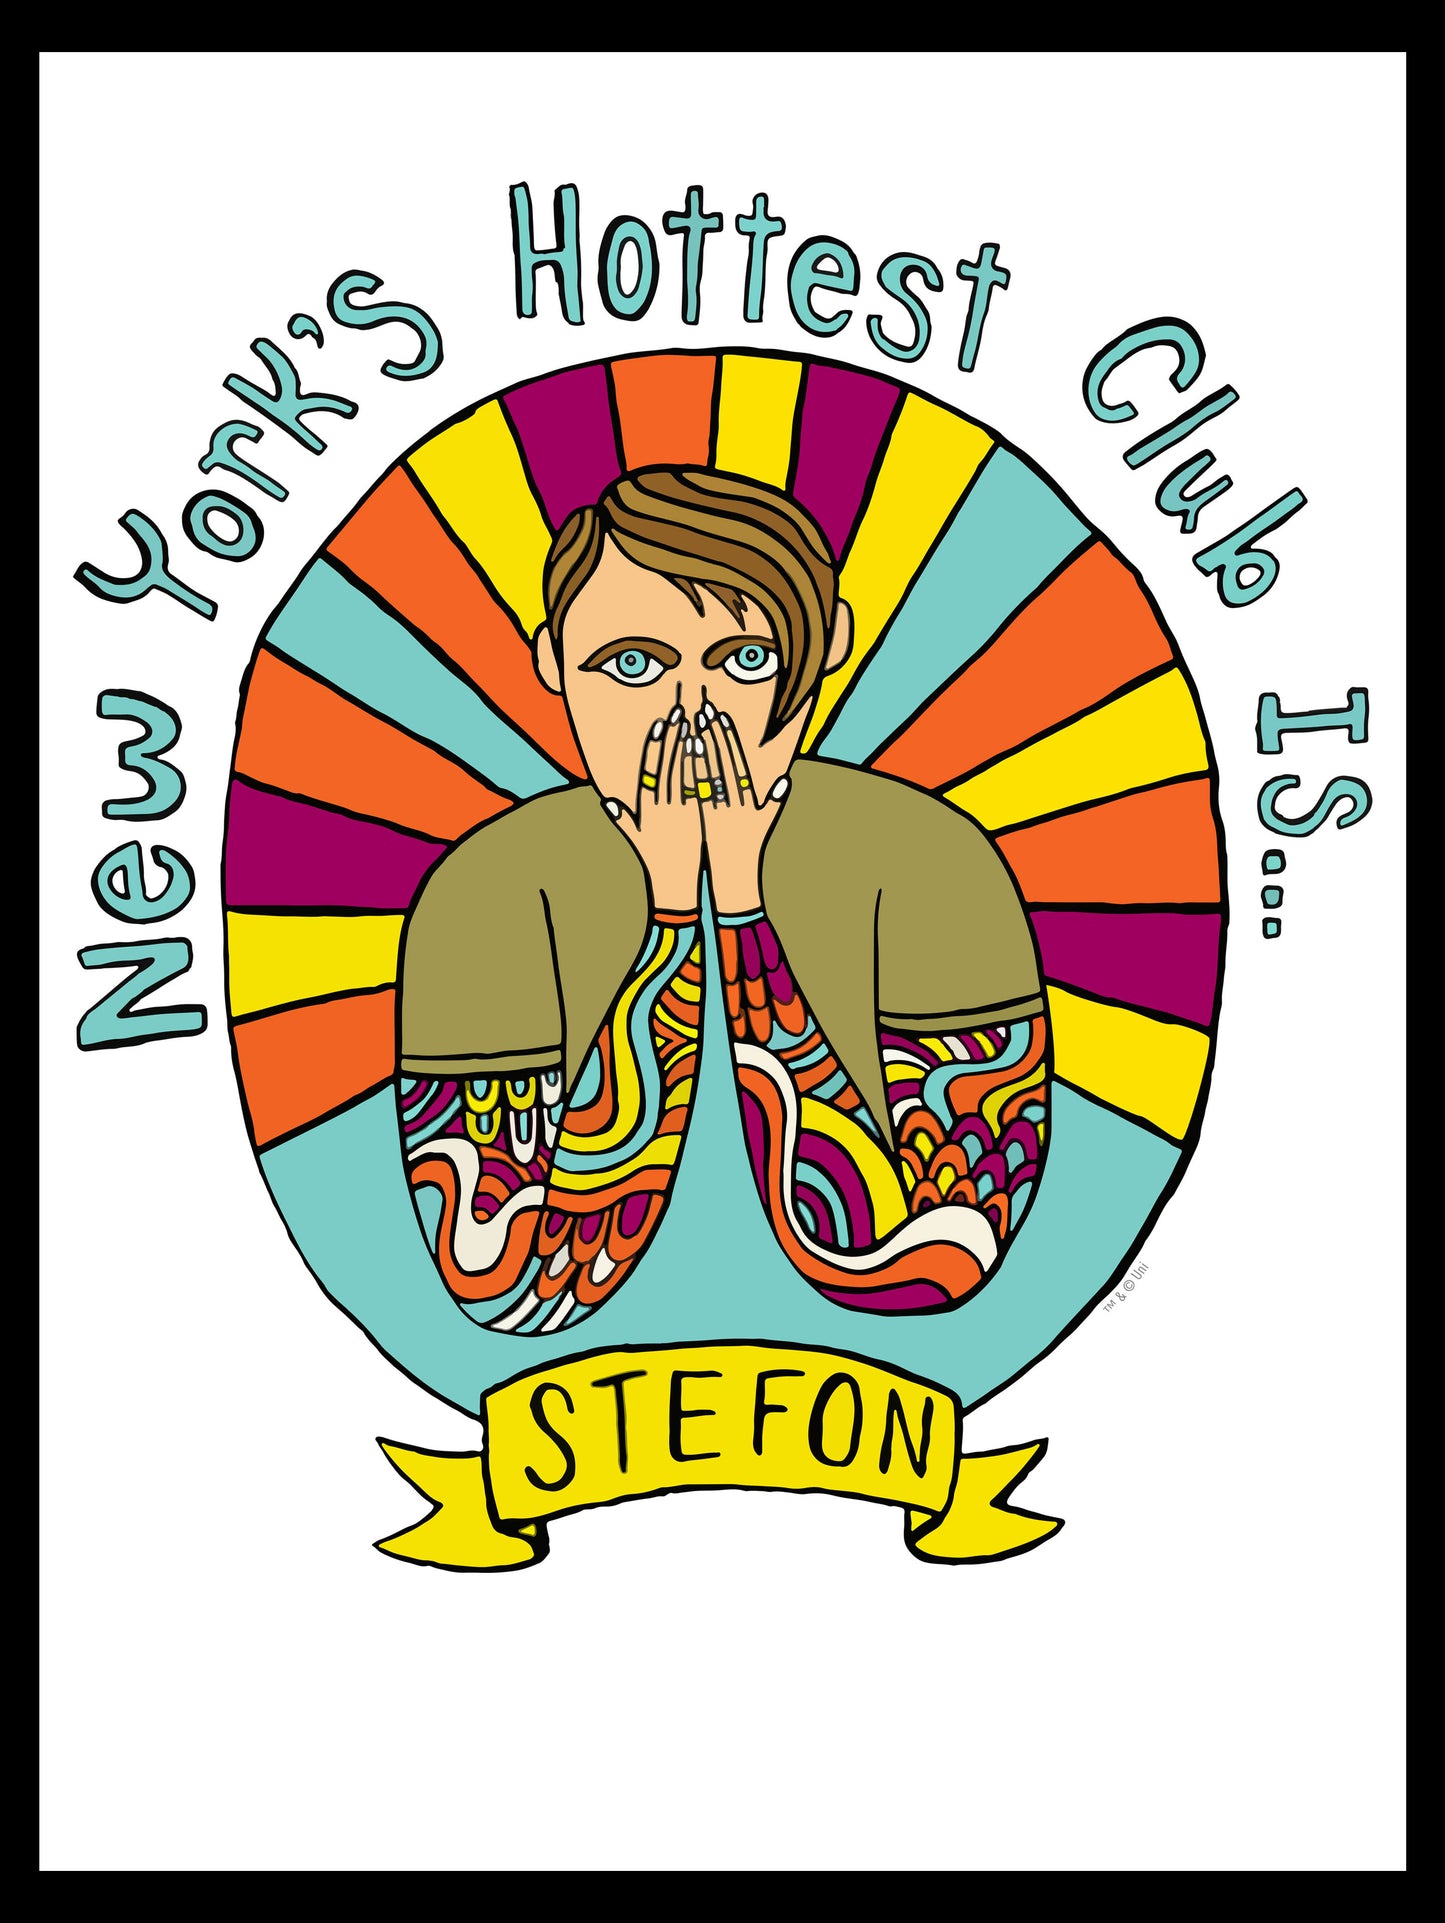 Saturday Night Live Stefon New York's Hottest Club Poster - 18x24